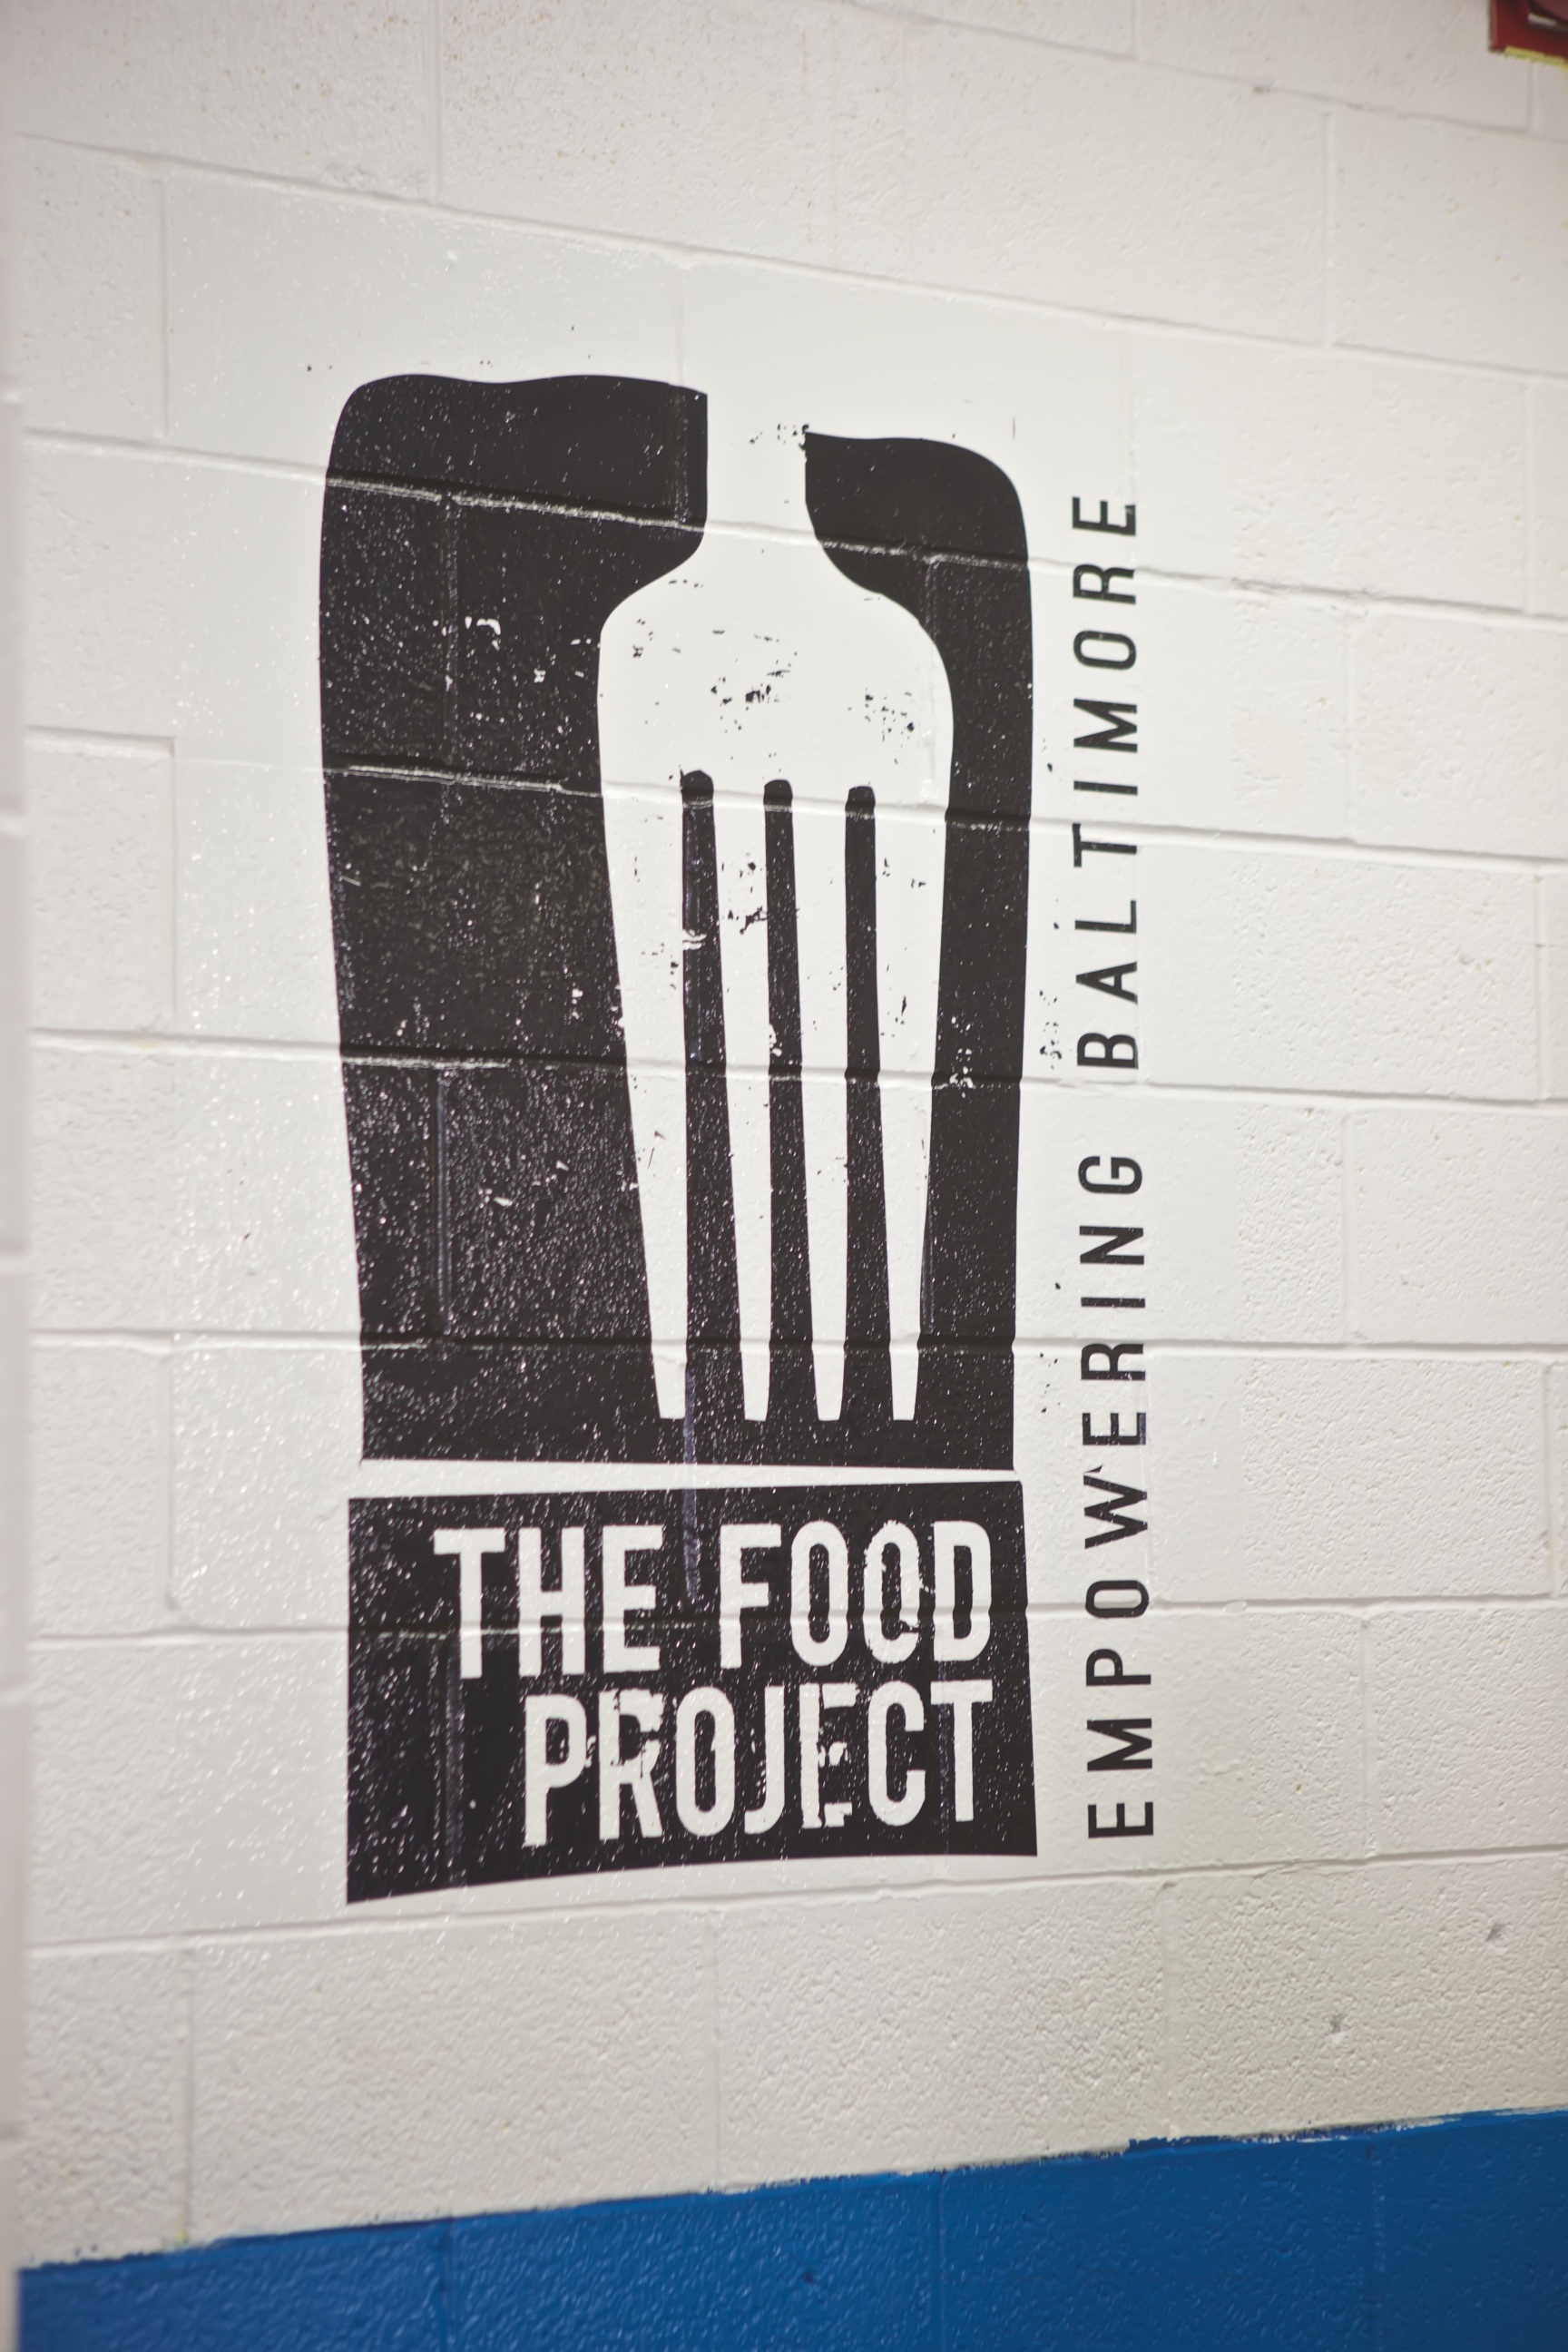 January 26, 2019 - Site visit to The Food Project, 424 S. Pulaski Street 2019-01-26 (1).jpg